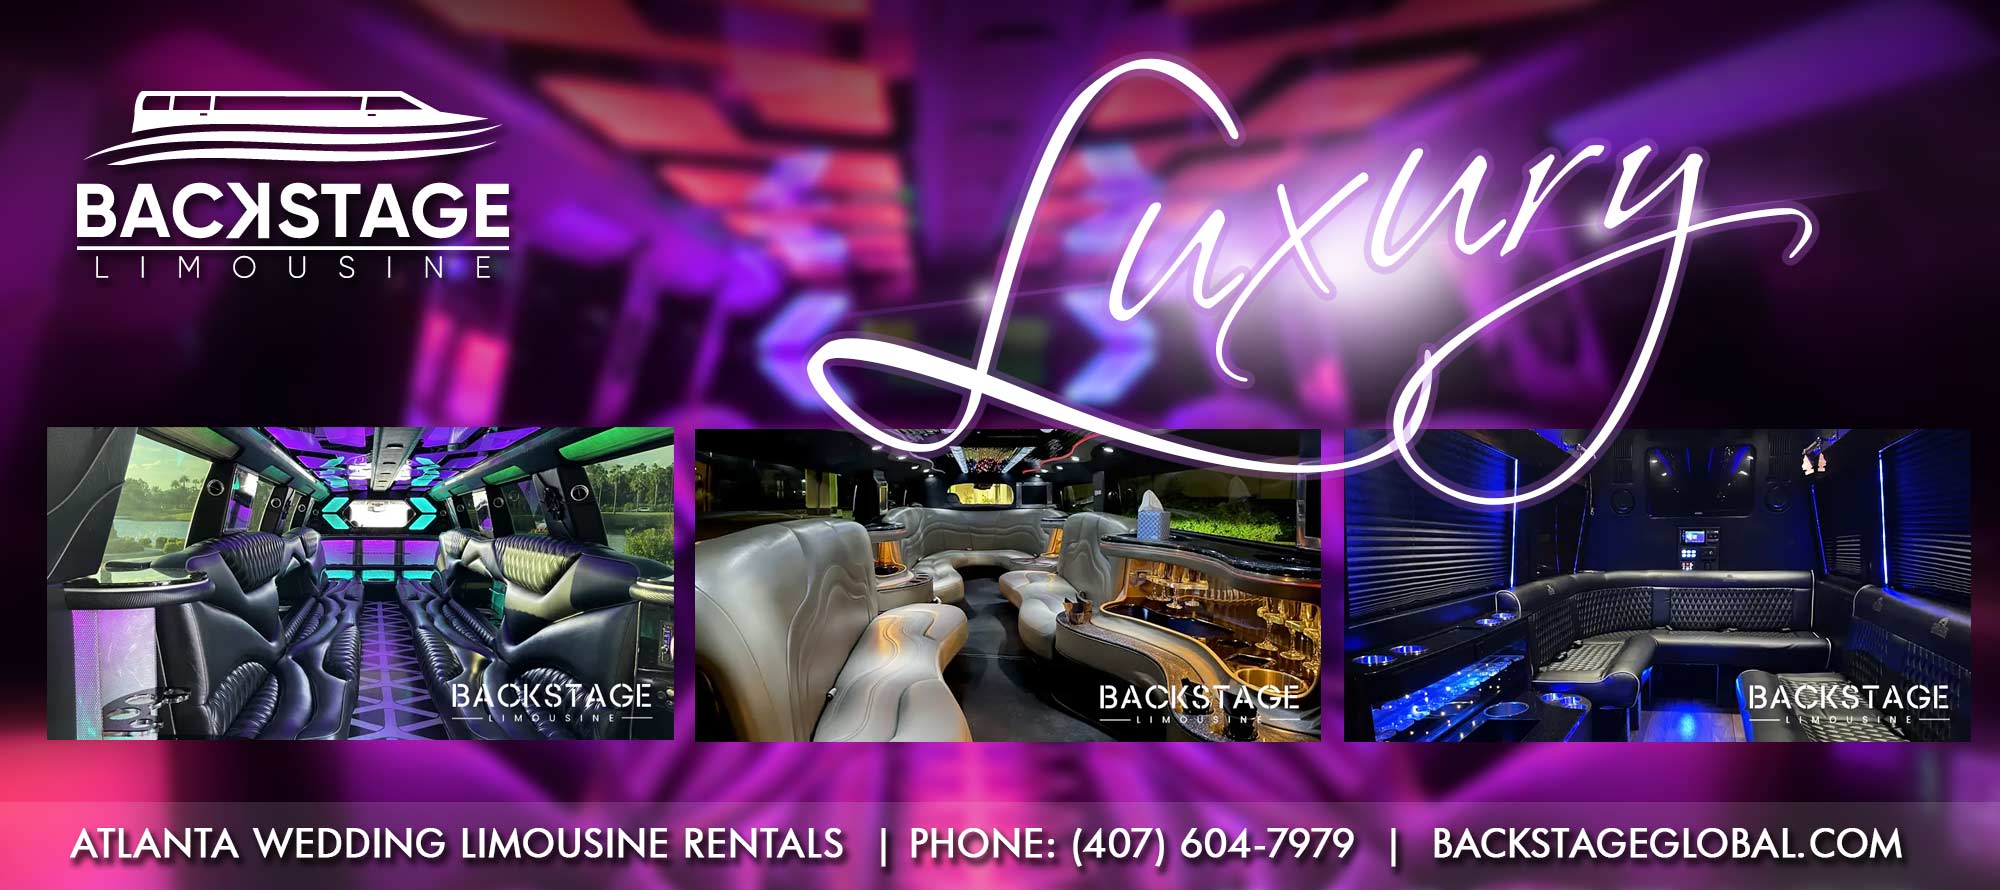 Atlanta Prom Limo Rental - Atlanta Prom Limousine Services Deals - Best Atlanta Prom Limo